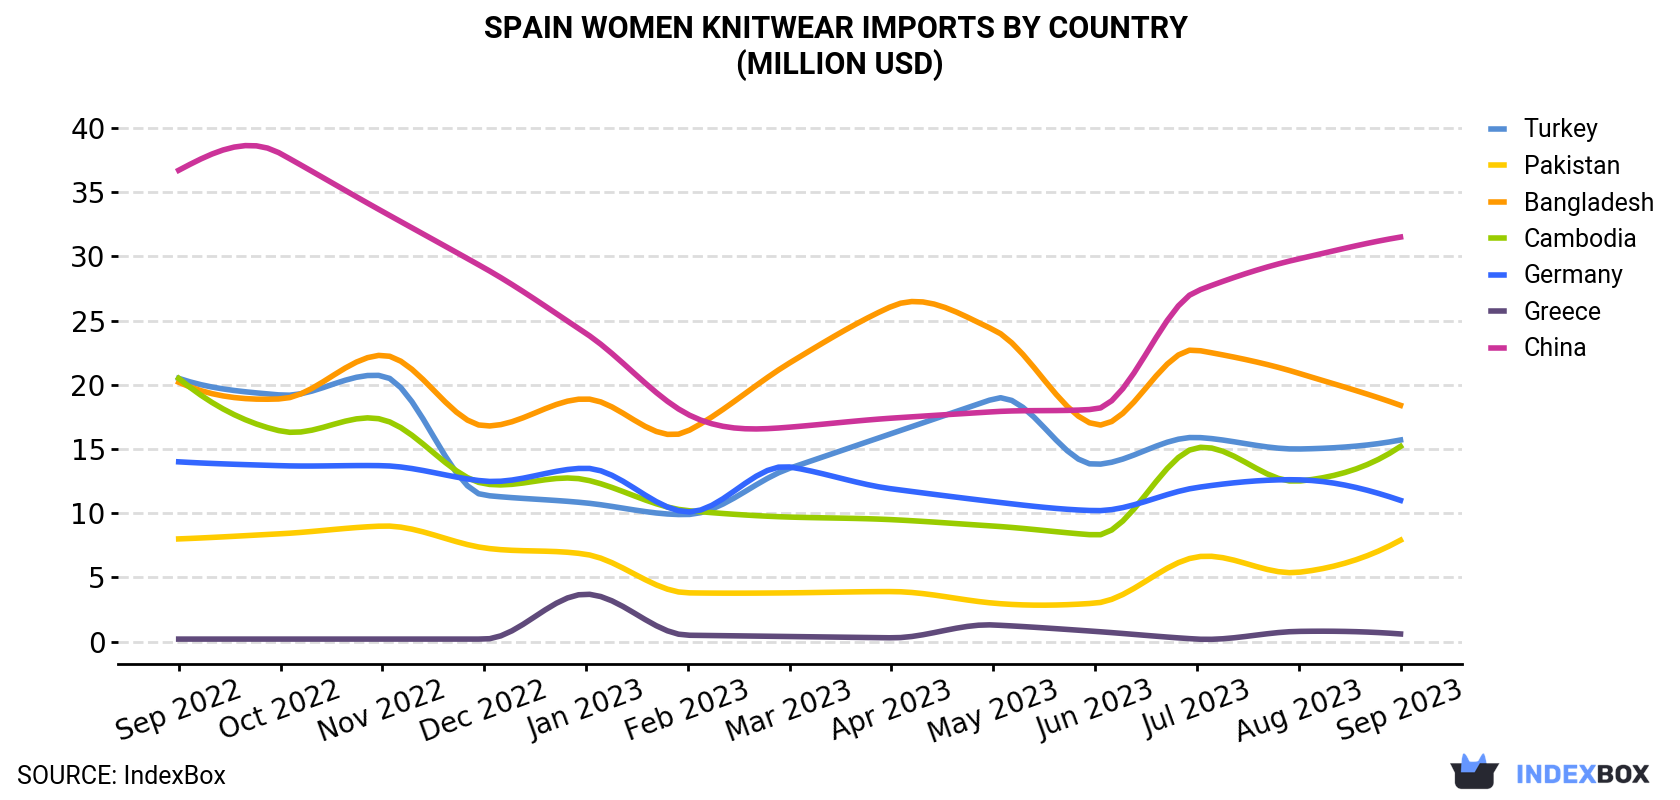 Spain Women Knitwear Imports By Country (Million USD)